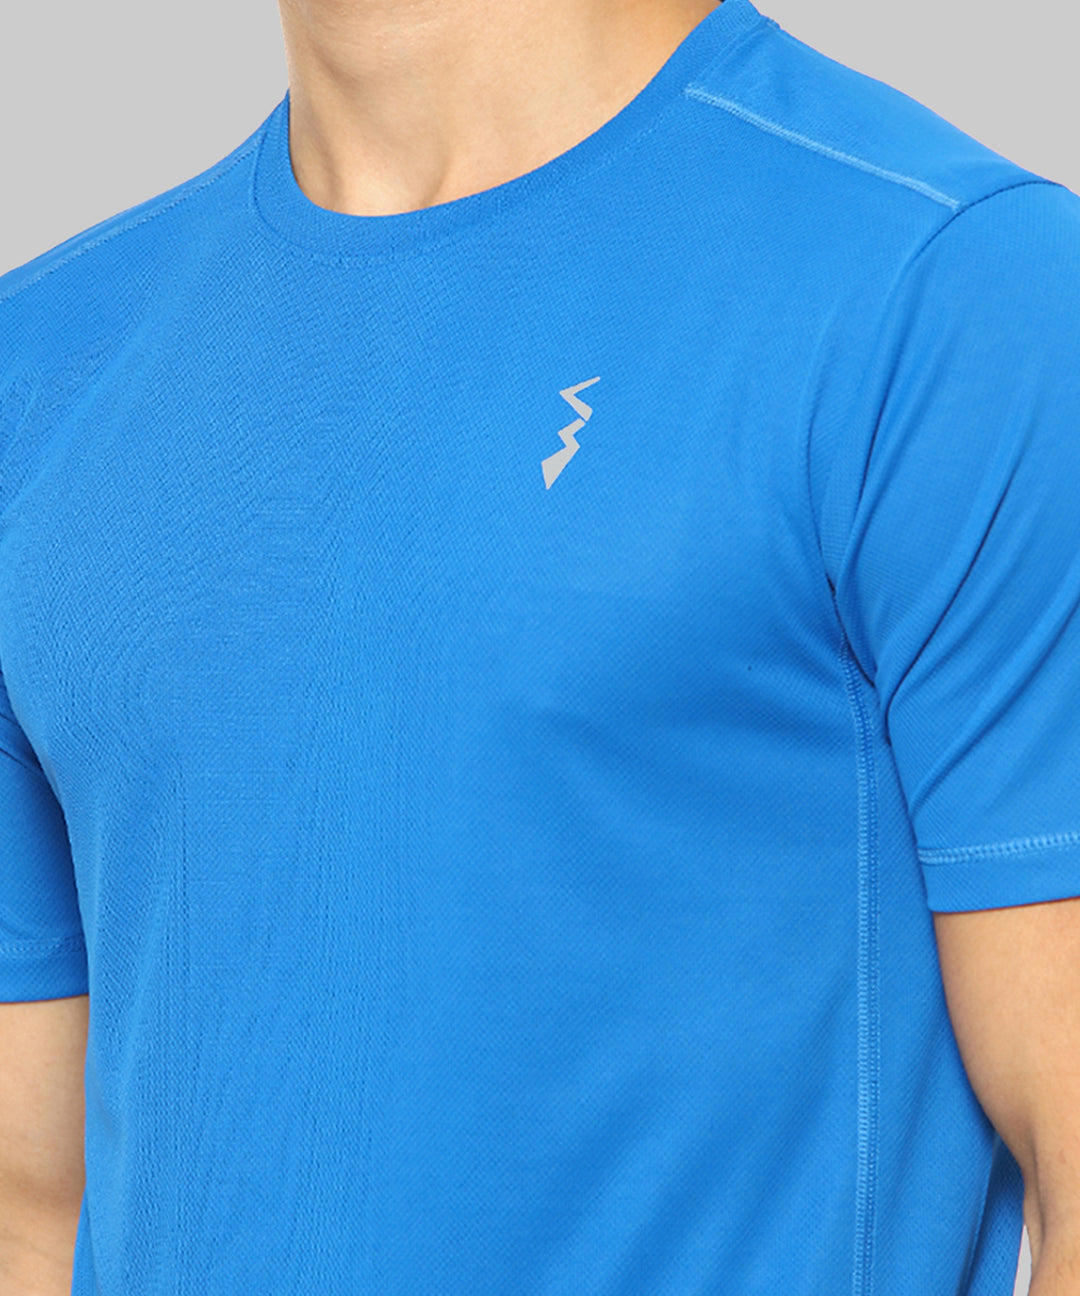 Blue Men Solid Polyester Sports Tshirt Round Neck